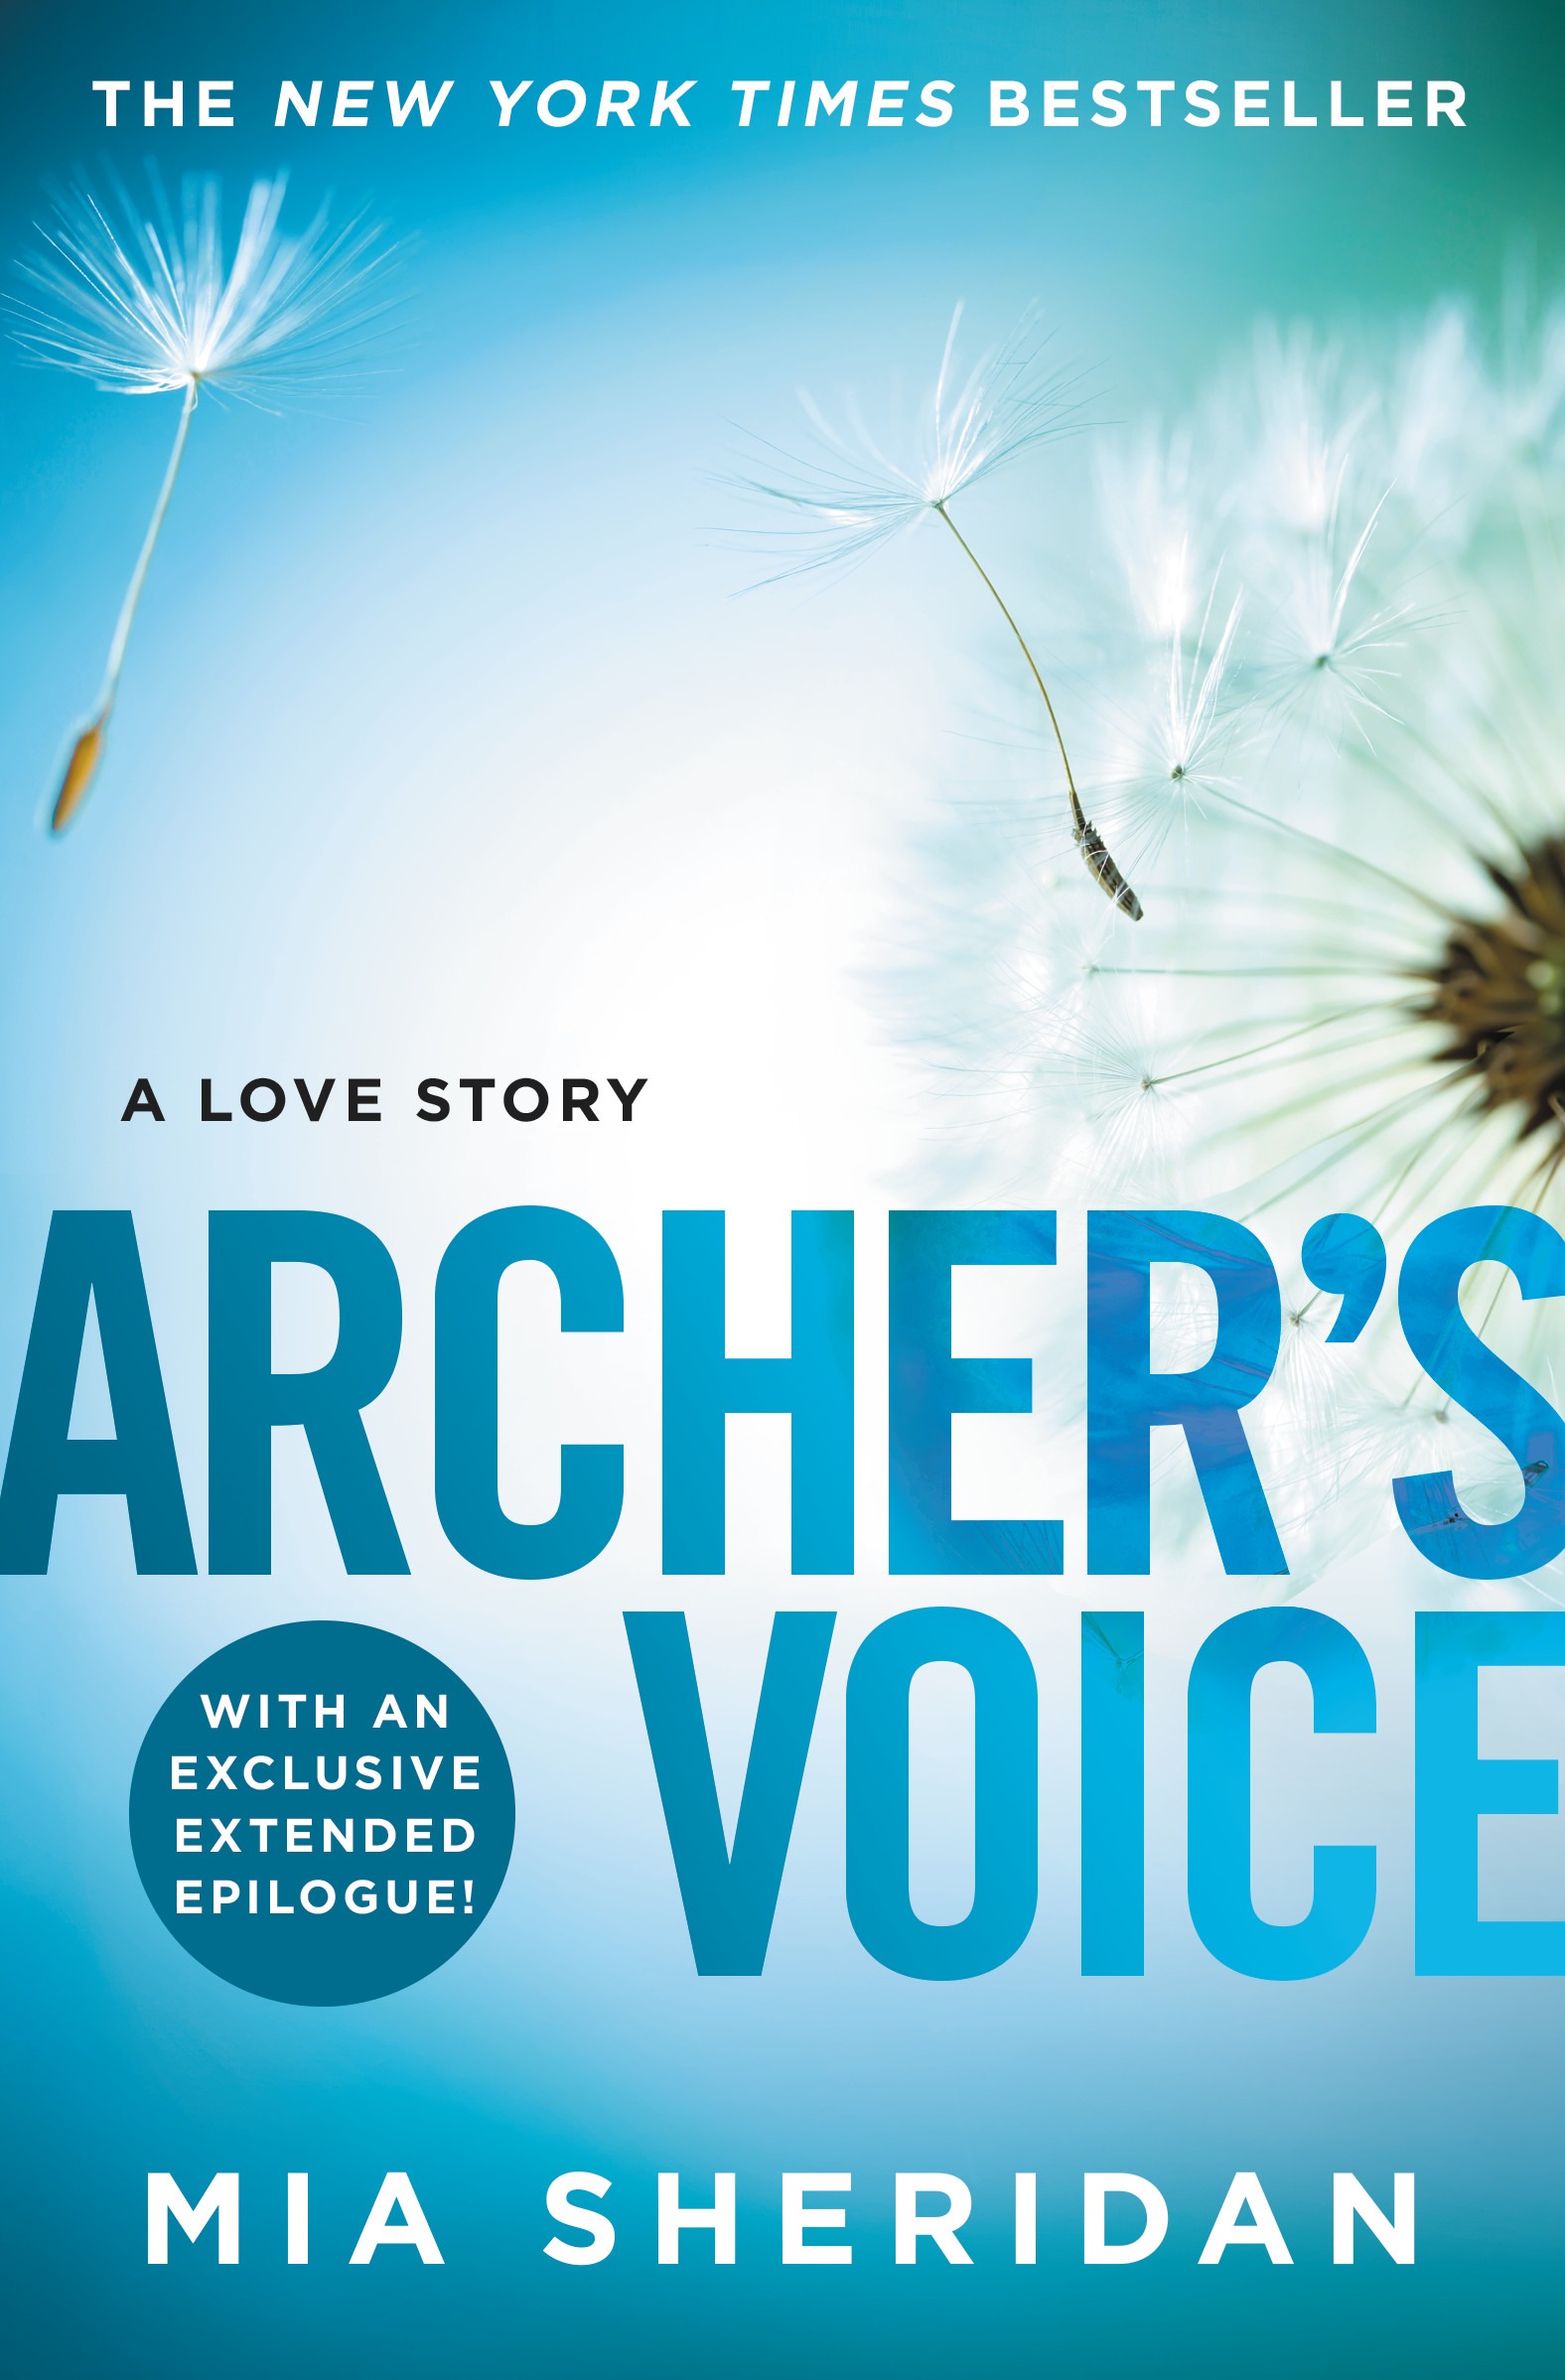 ARCHER S VOICE BY MIA SHERIDAN